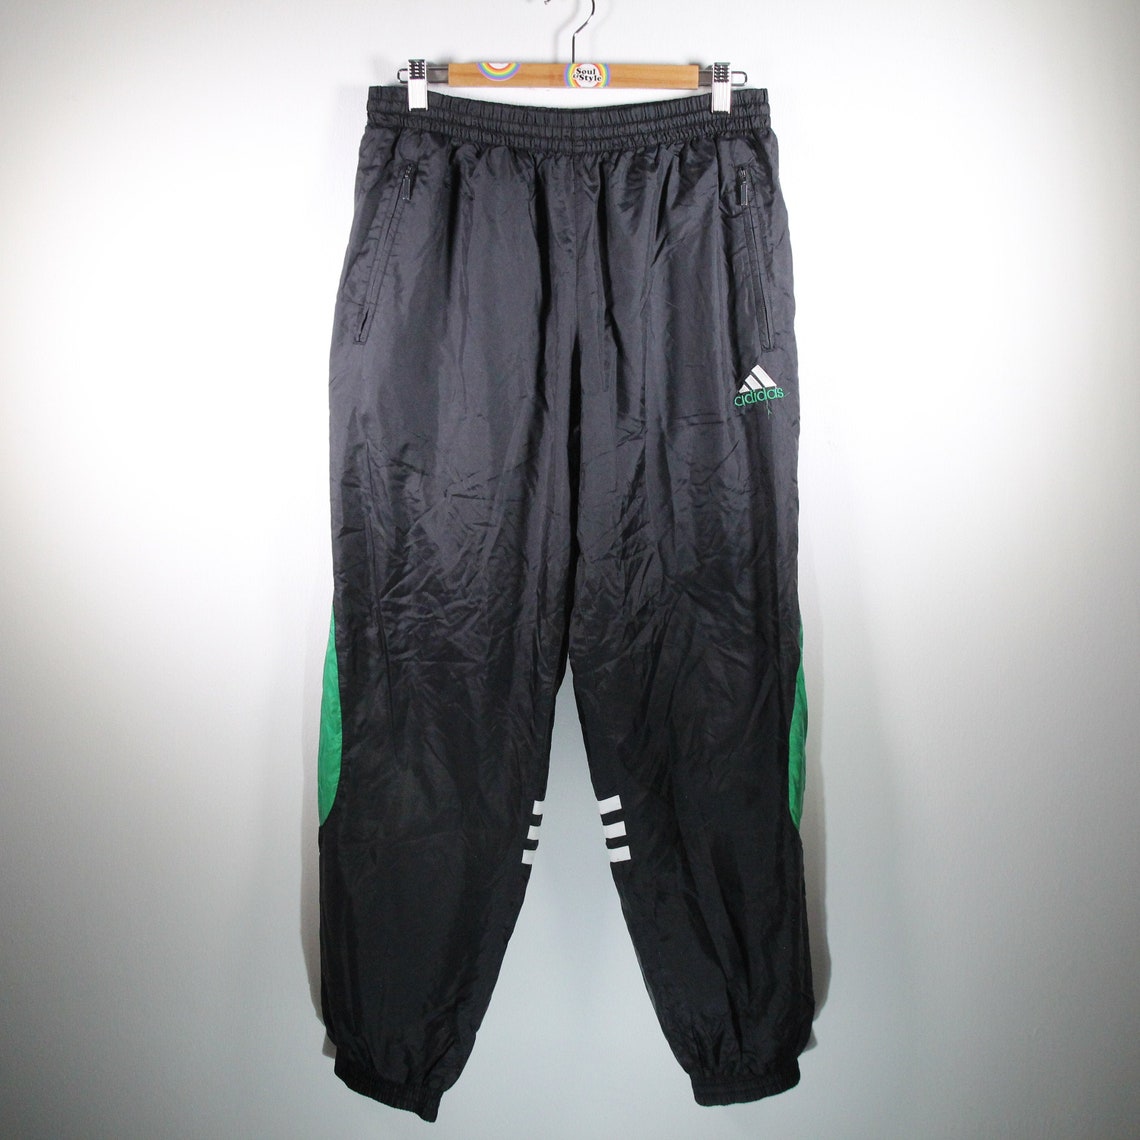 Vintage 90s Sports Pants Size L D6/F180 Adidas | Etsy